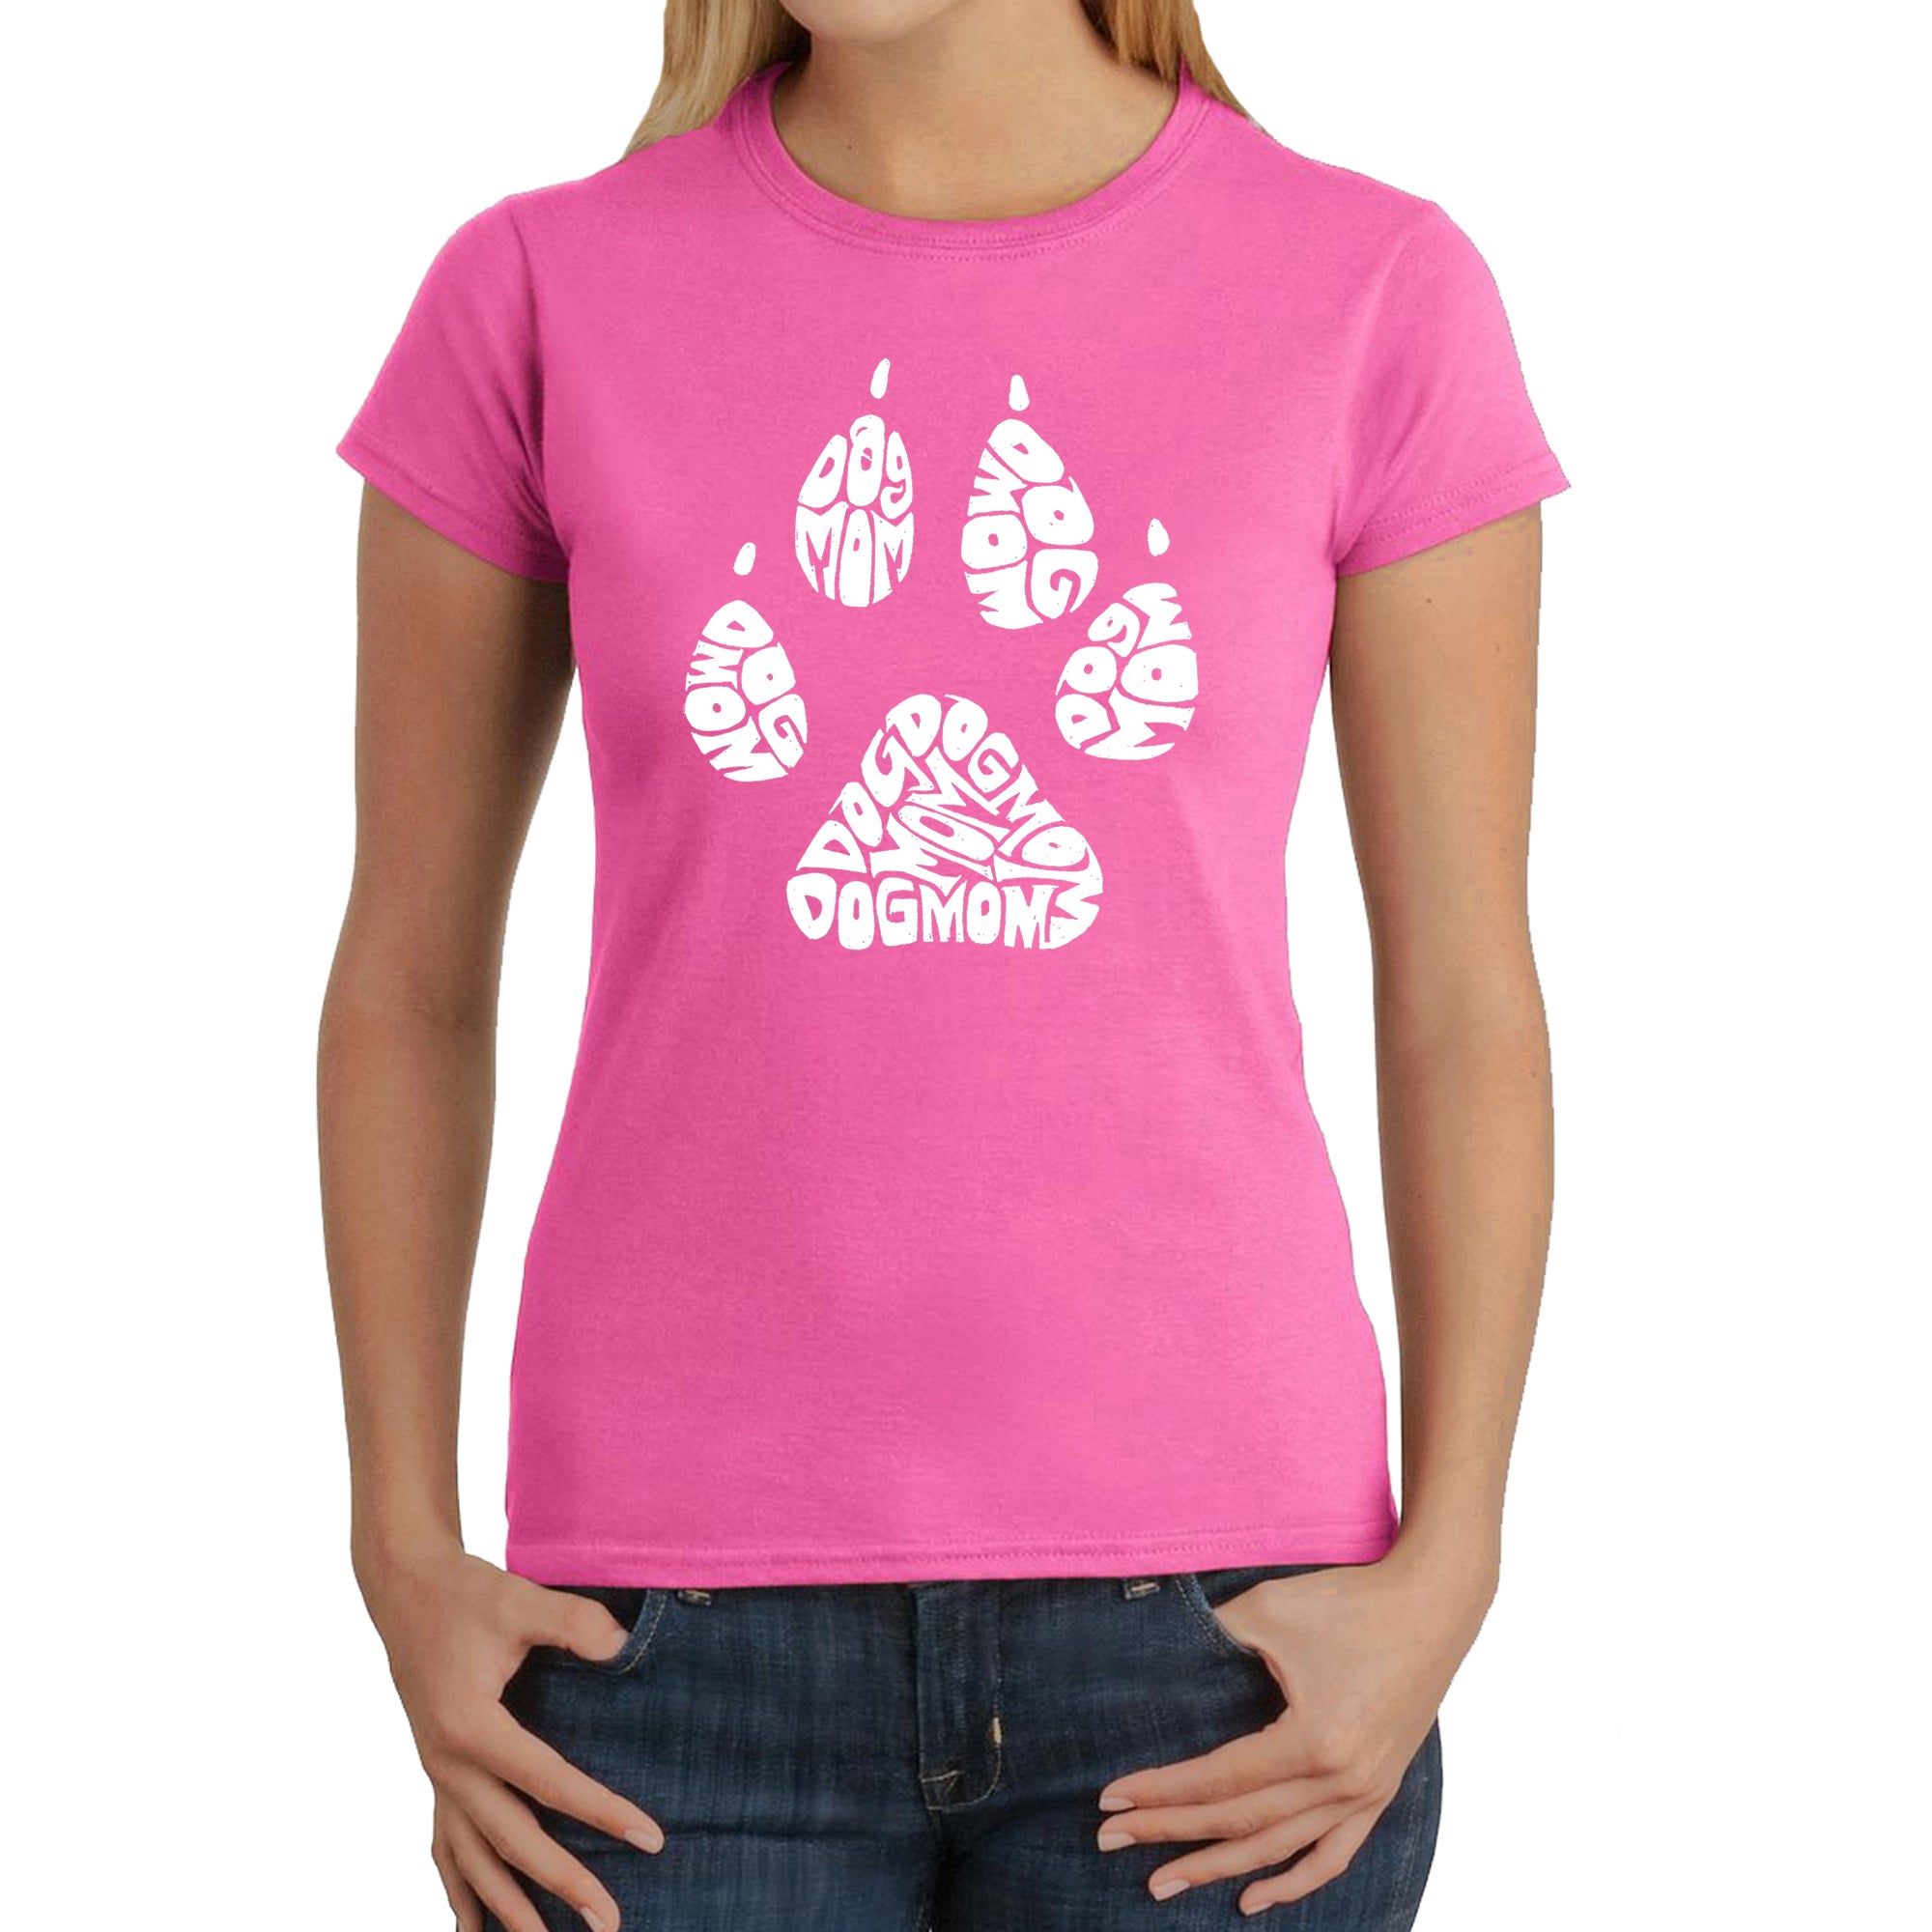 Dog Mom - Women's Word Art T-Shirt - Pink - XS